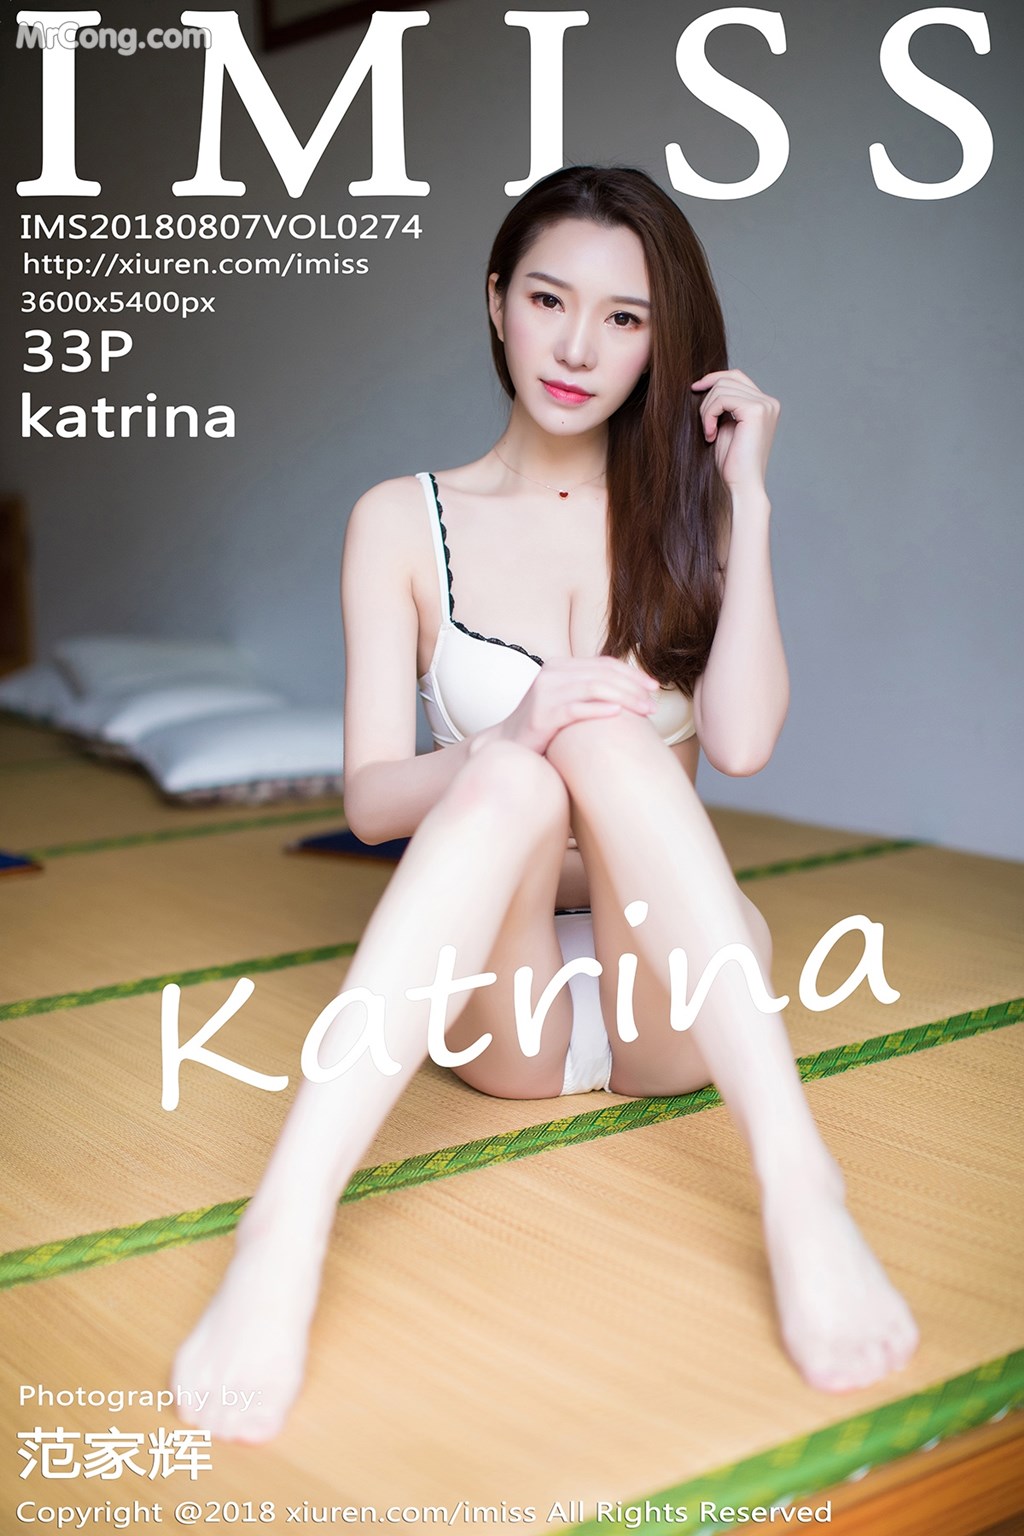 IMISS Vol.274: Model katrina (34 photos) photo 1-0